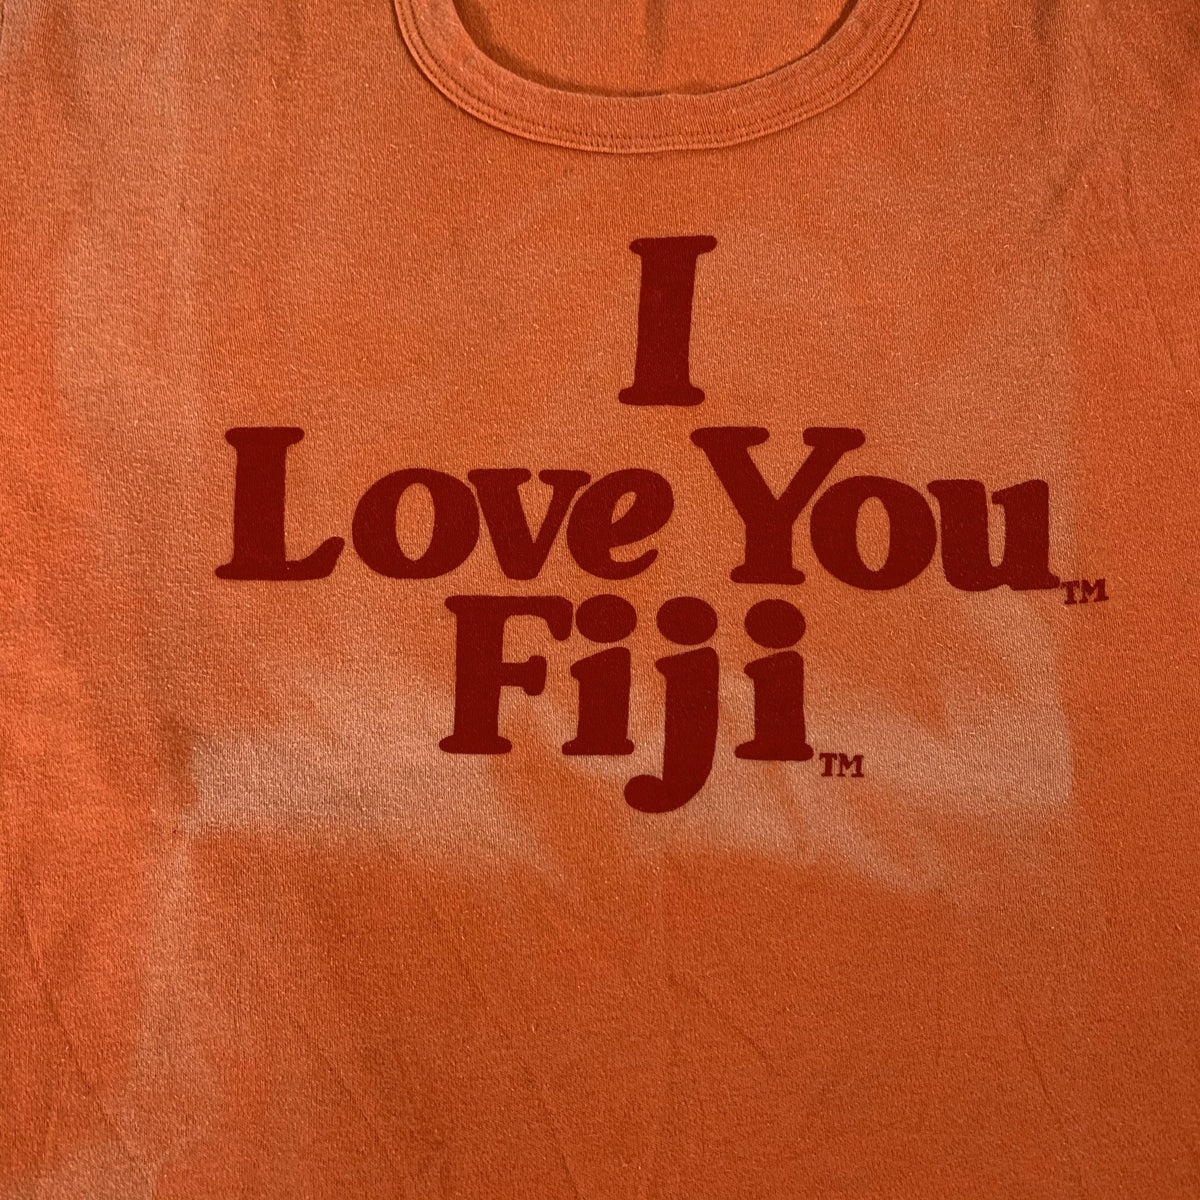 Vintage Buxom “Fiji” T-Shirt - jointcustodydc